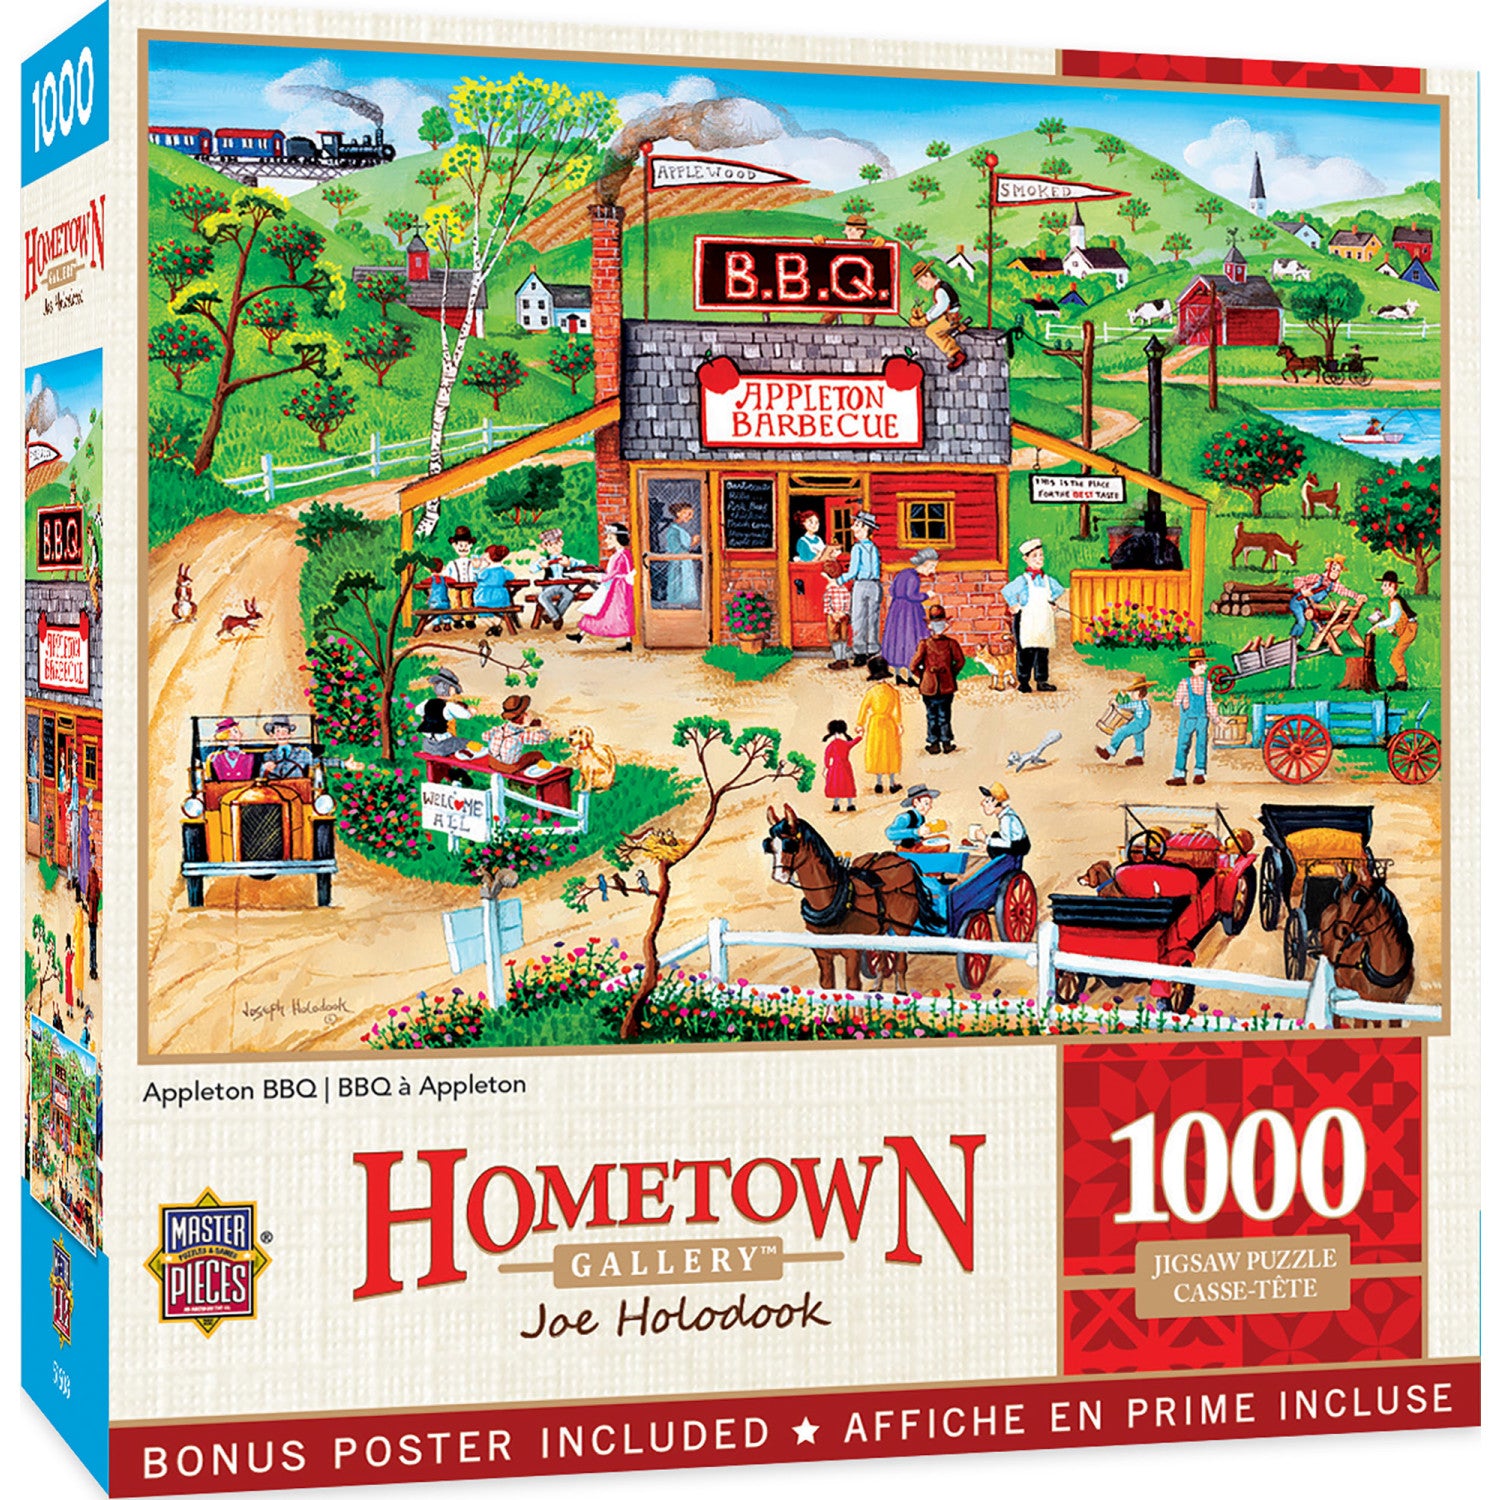 Hometown Gallery - Appleton BBQ 1000 Piece Jigsaw Puzzle